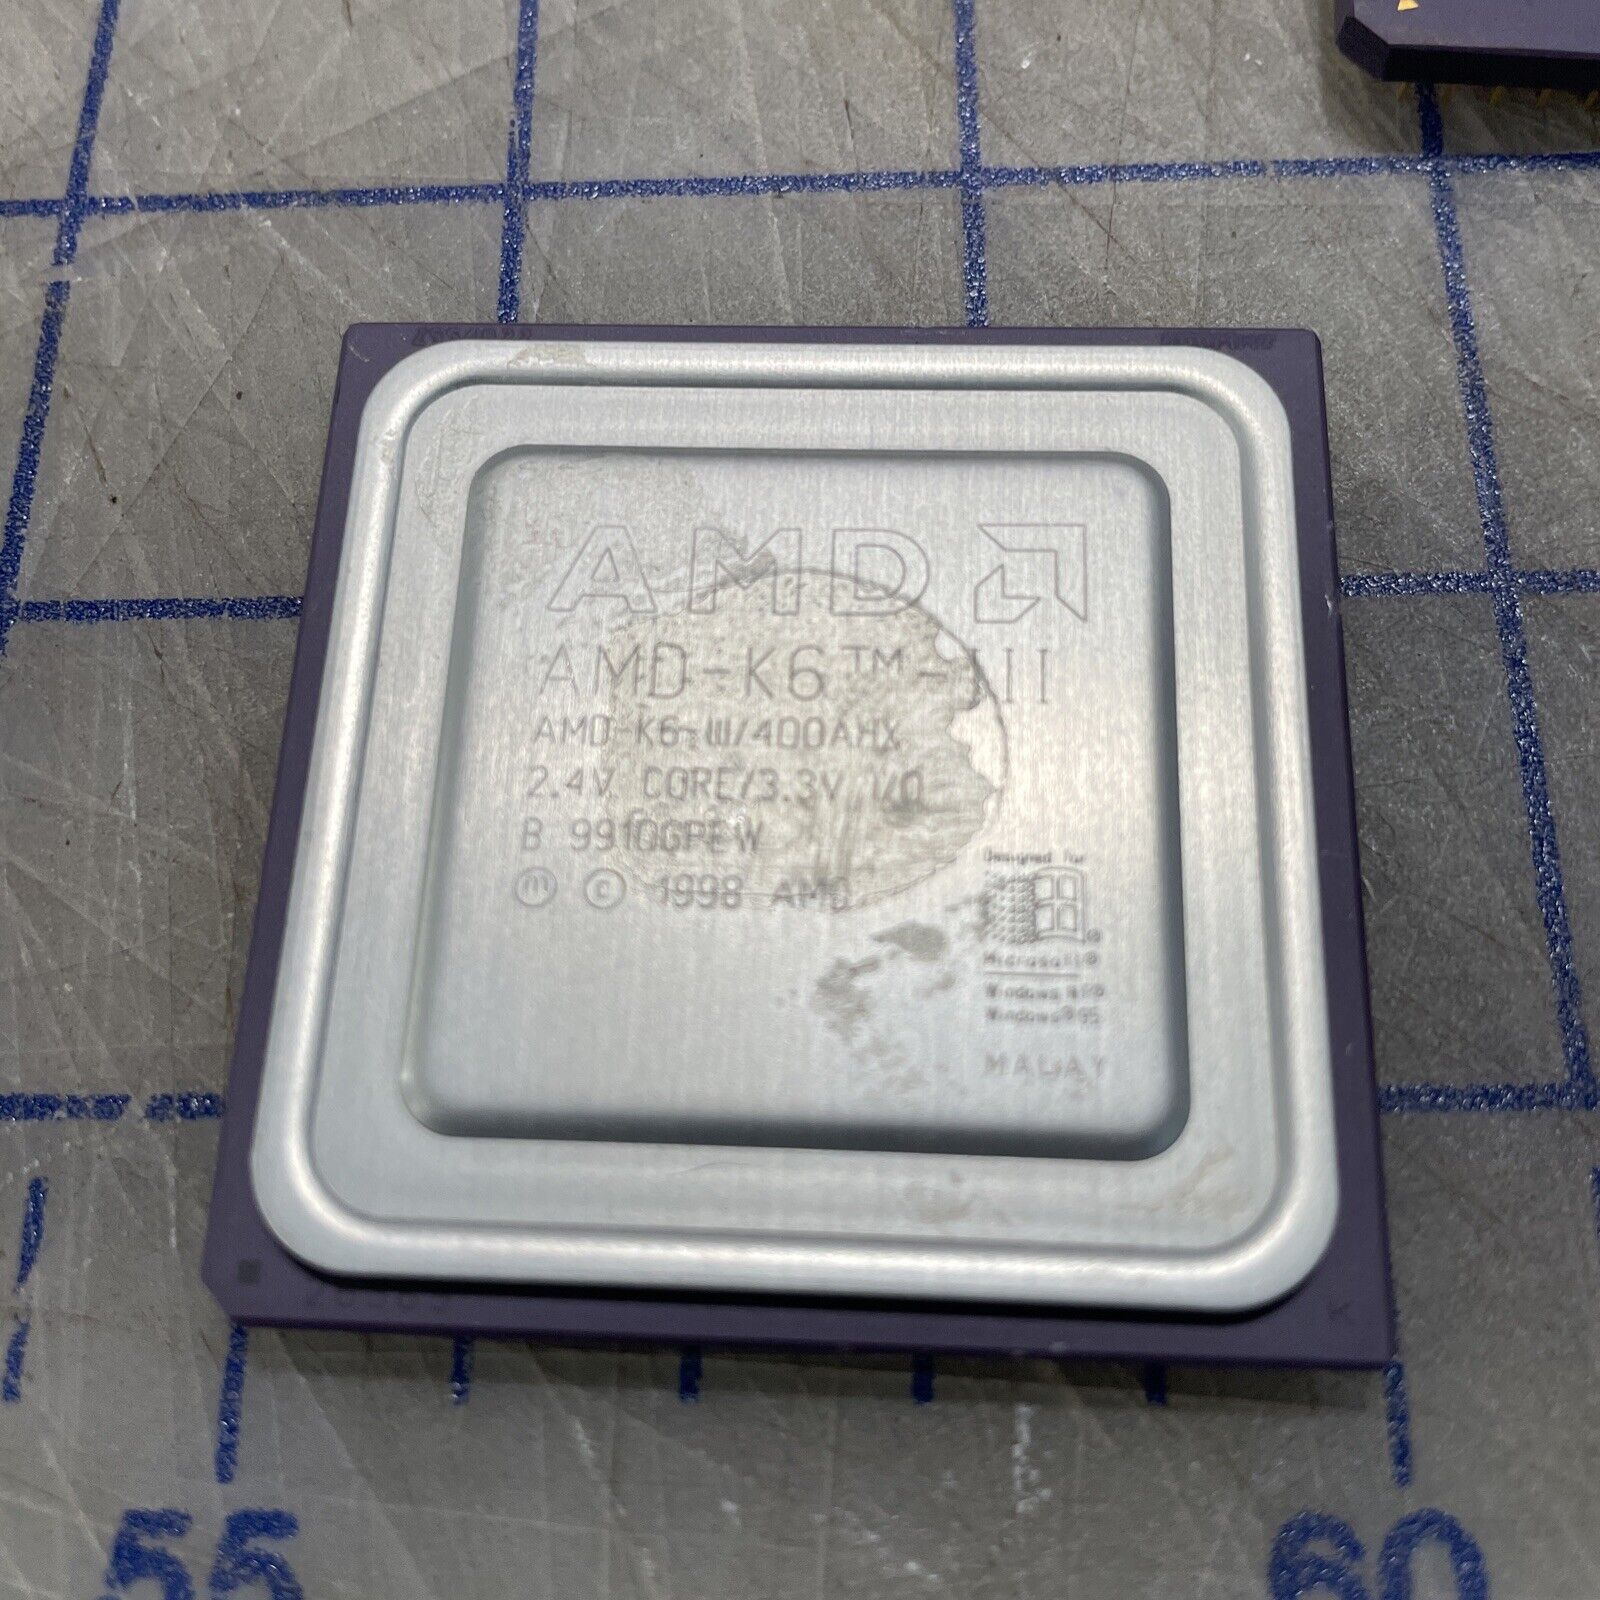 AMD AMD-K6-3/400AHX K6-III 400AHX 400 MHz 400MHZ Vintage Processor CPU